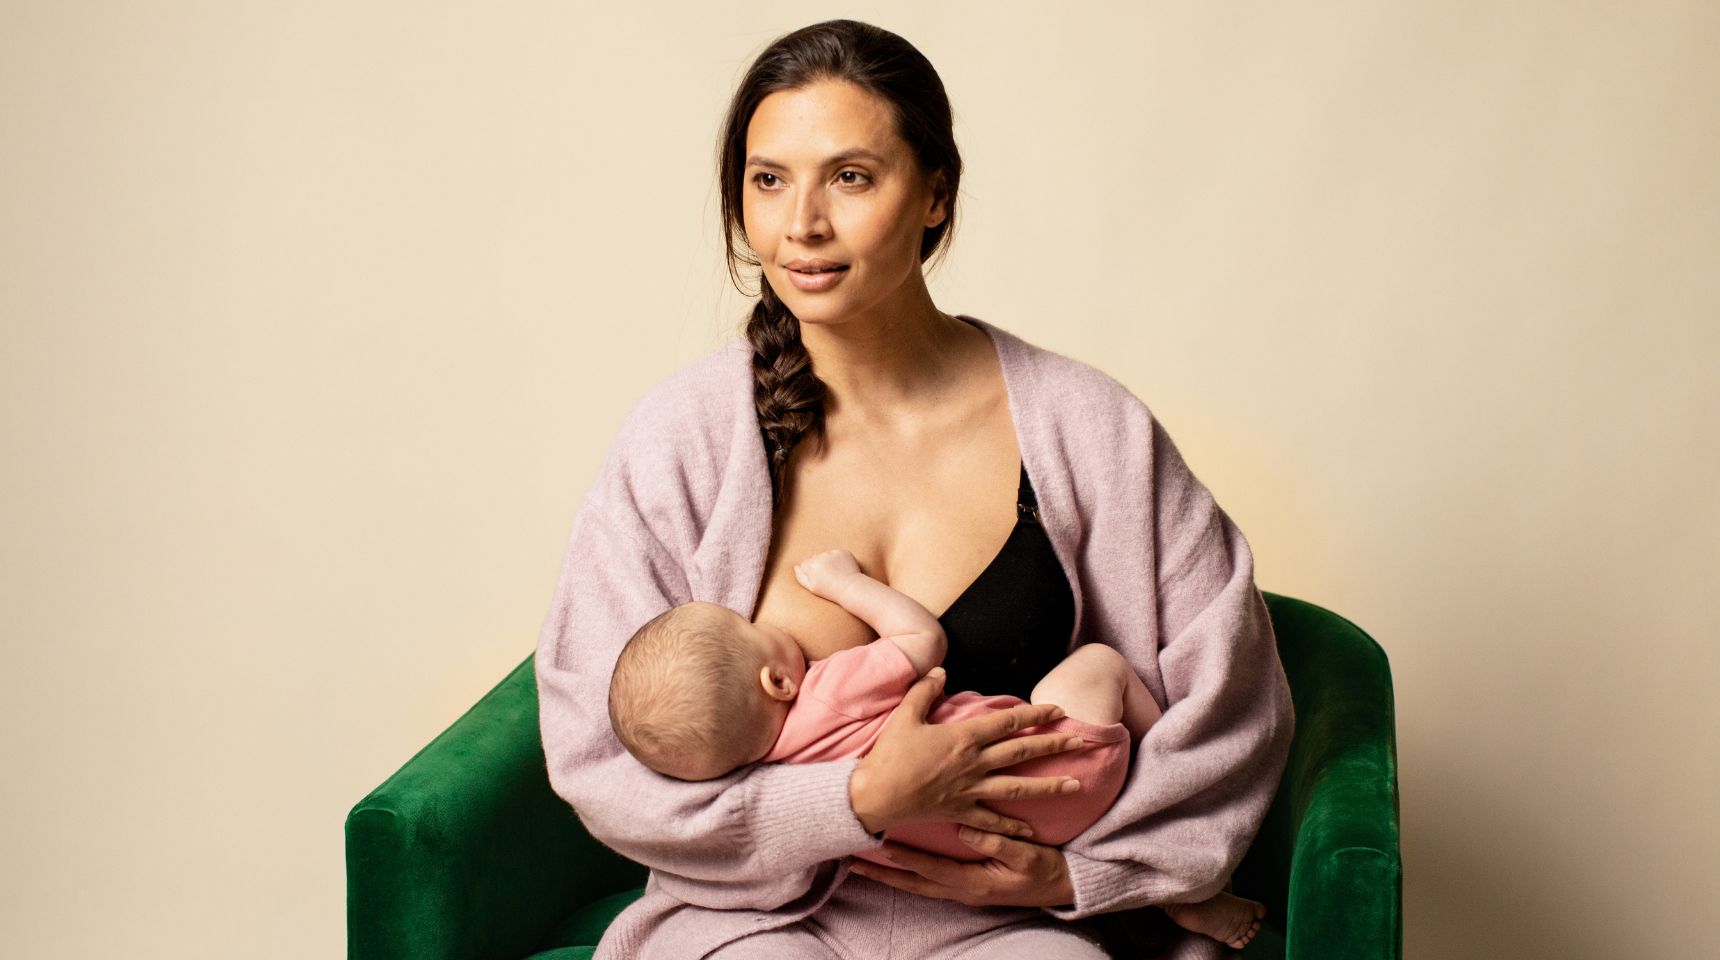 PUMPING MOM ESSENTIAL  Mom essential, Pumping moms, Breastfeeding and  pumping